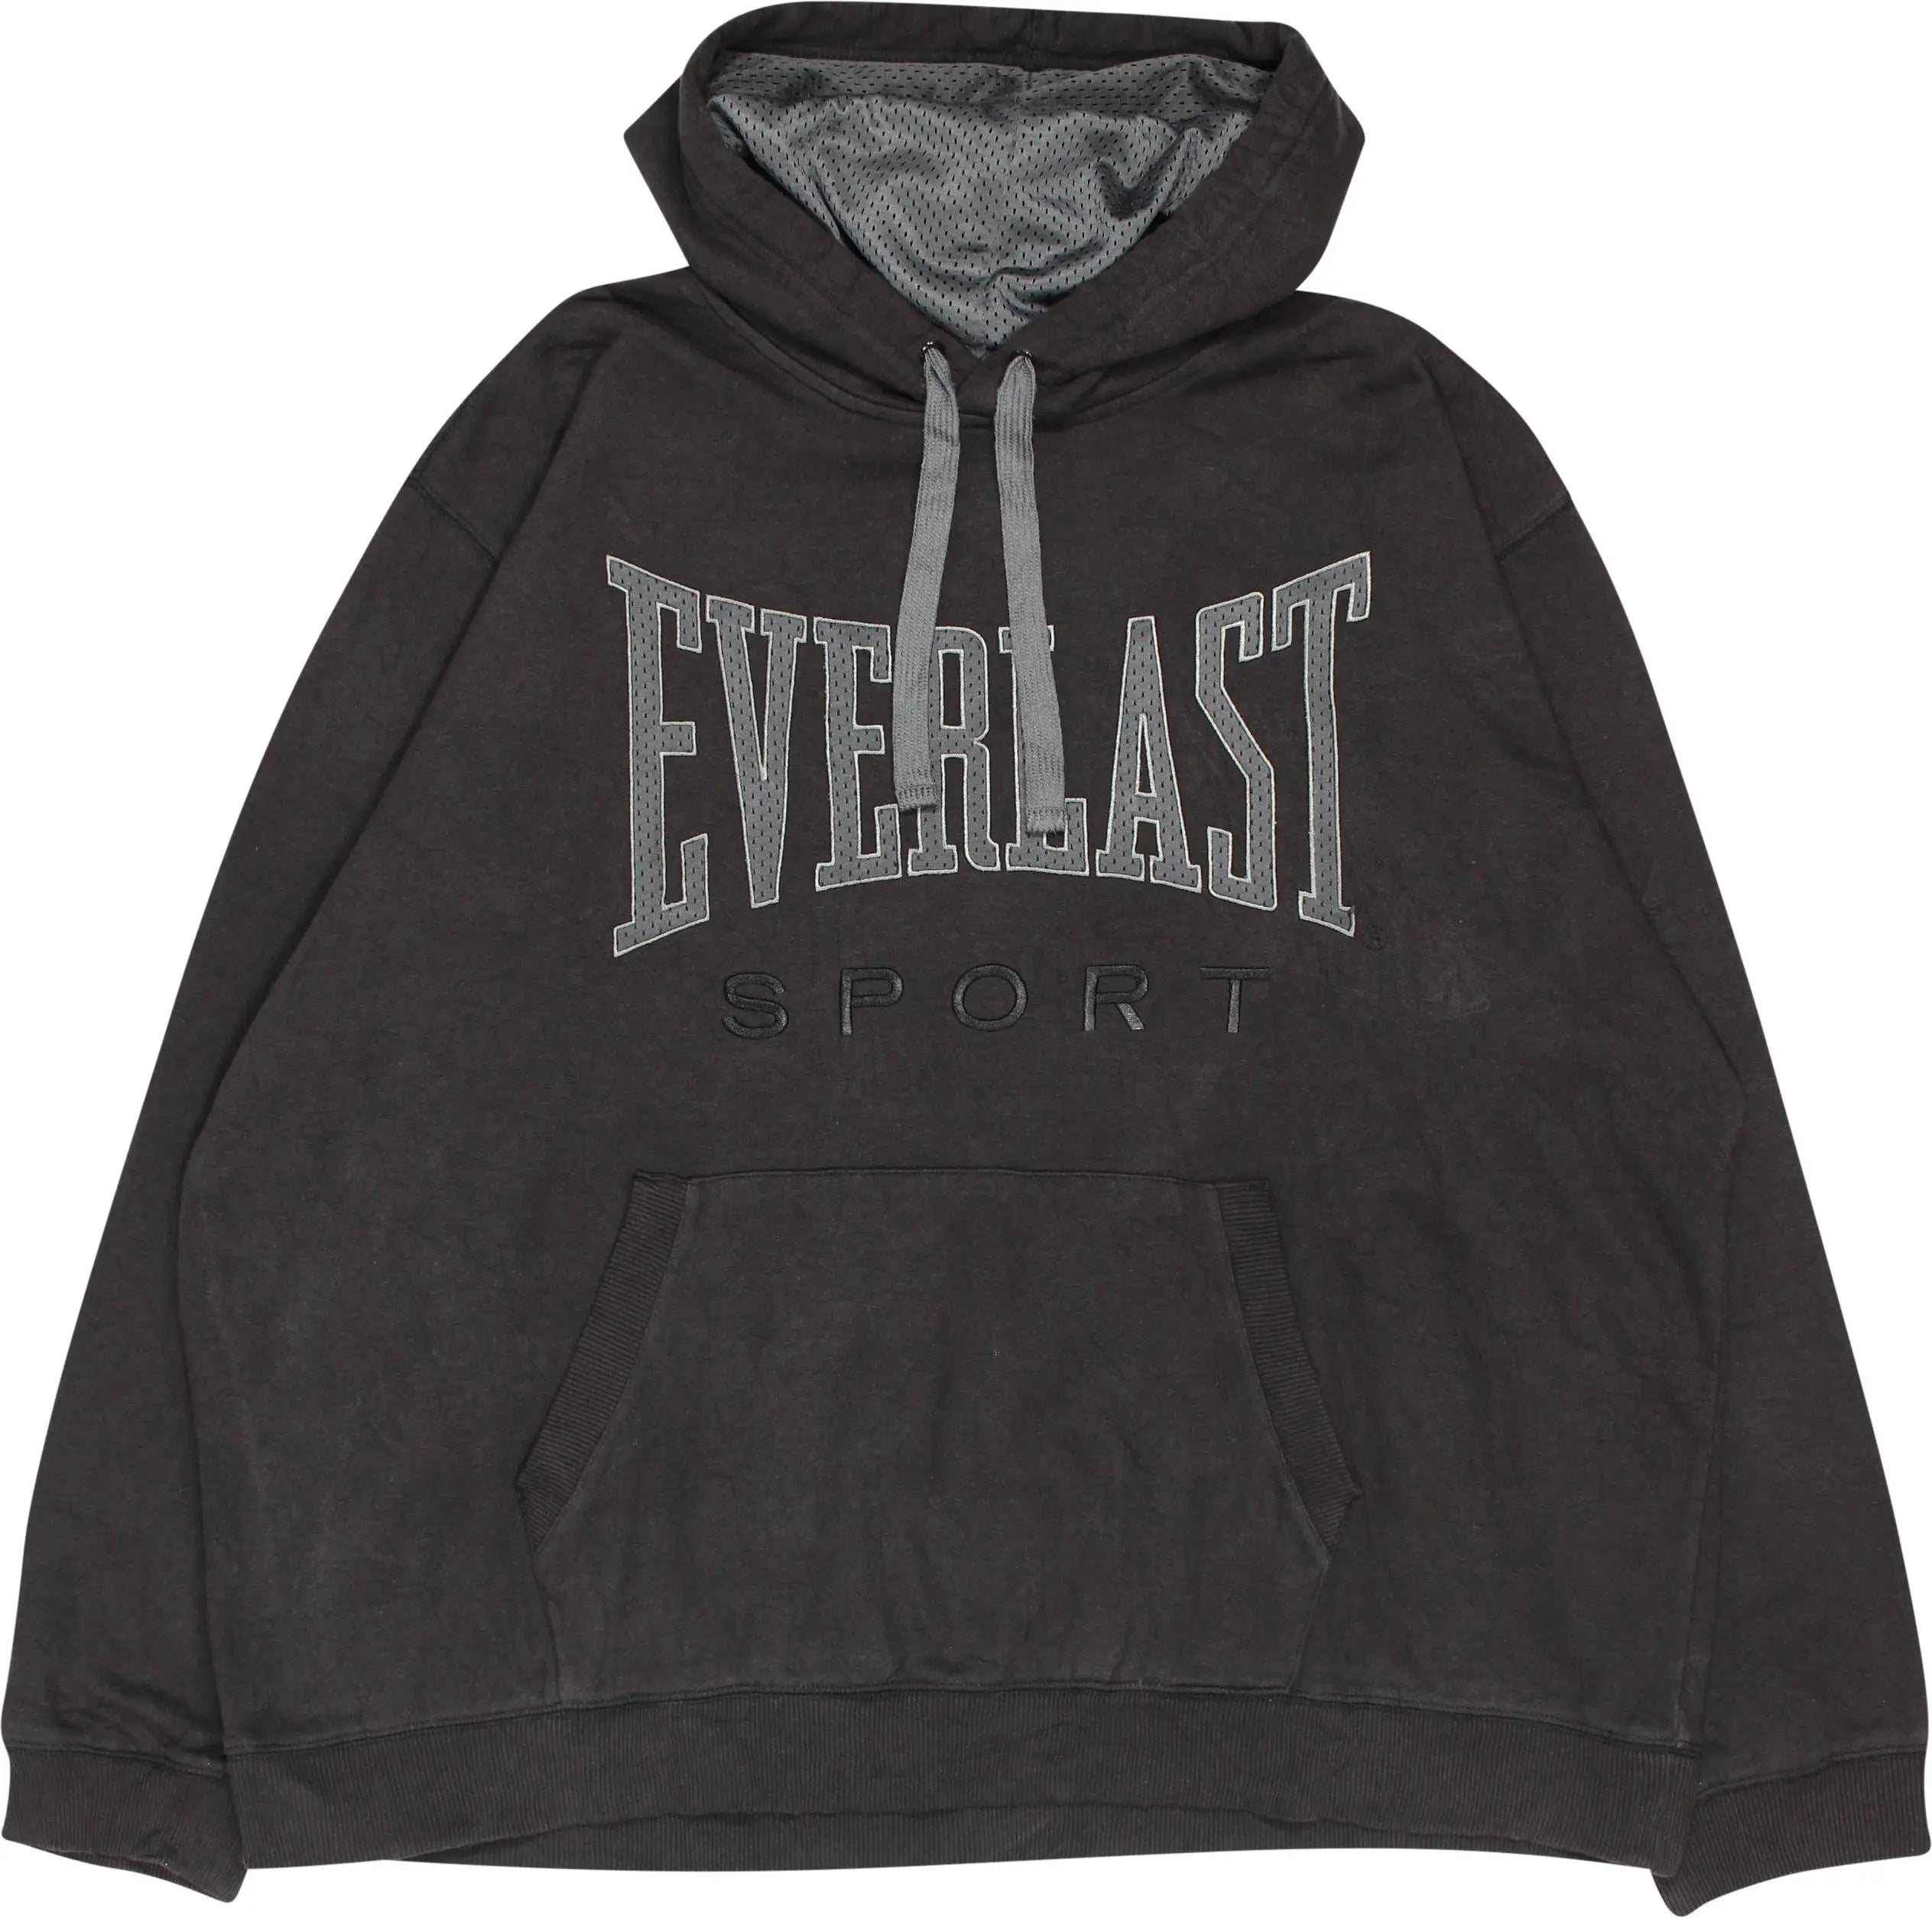 Everlast - Everlast Hoodie- ThriftTale.com - Vintage and second handclothing